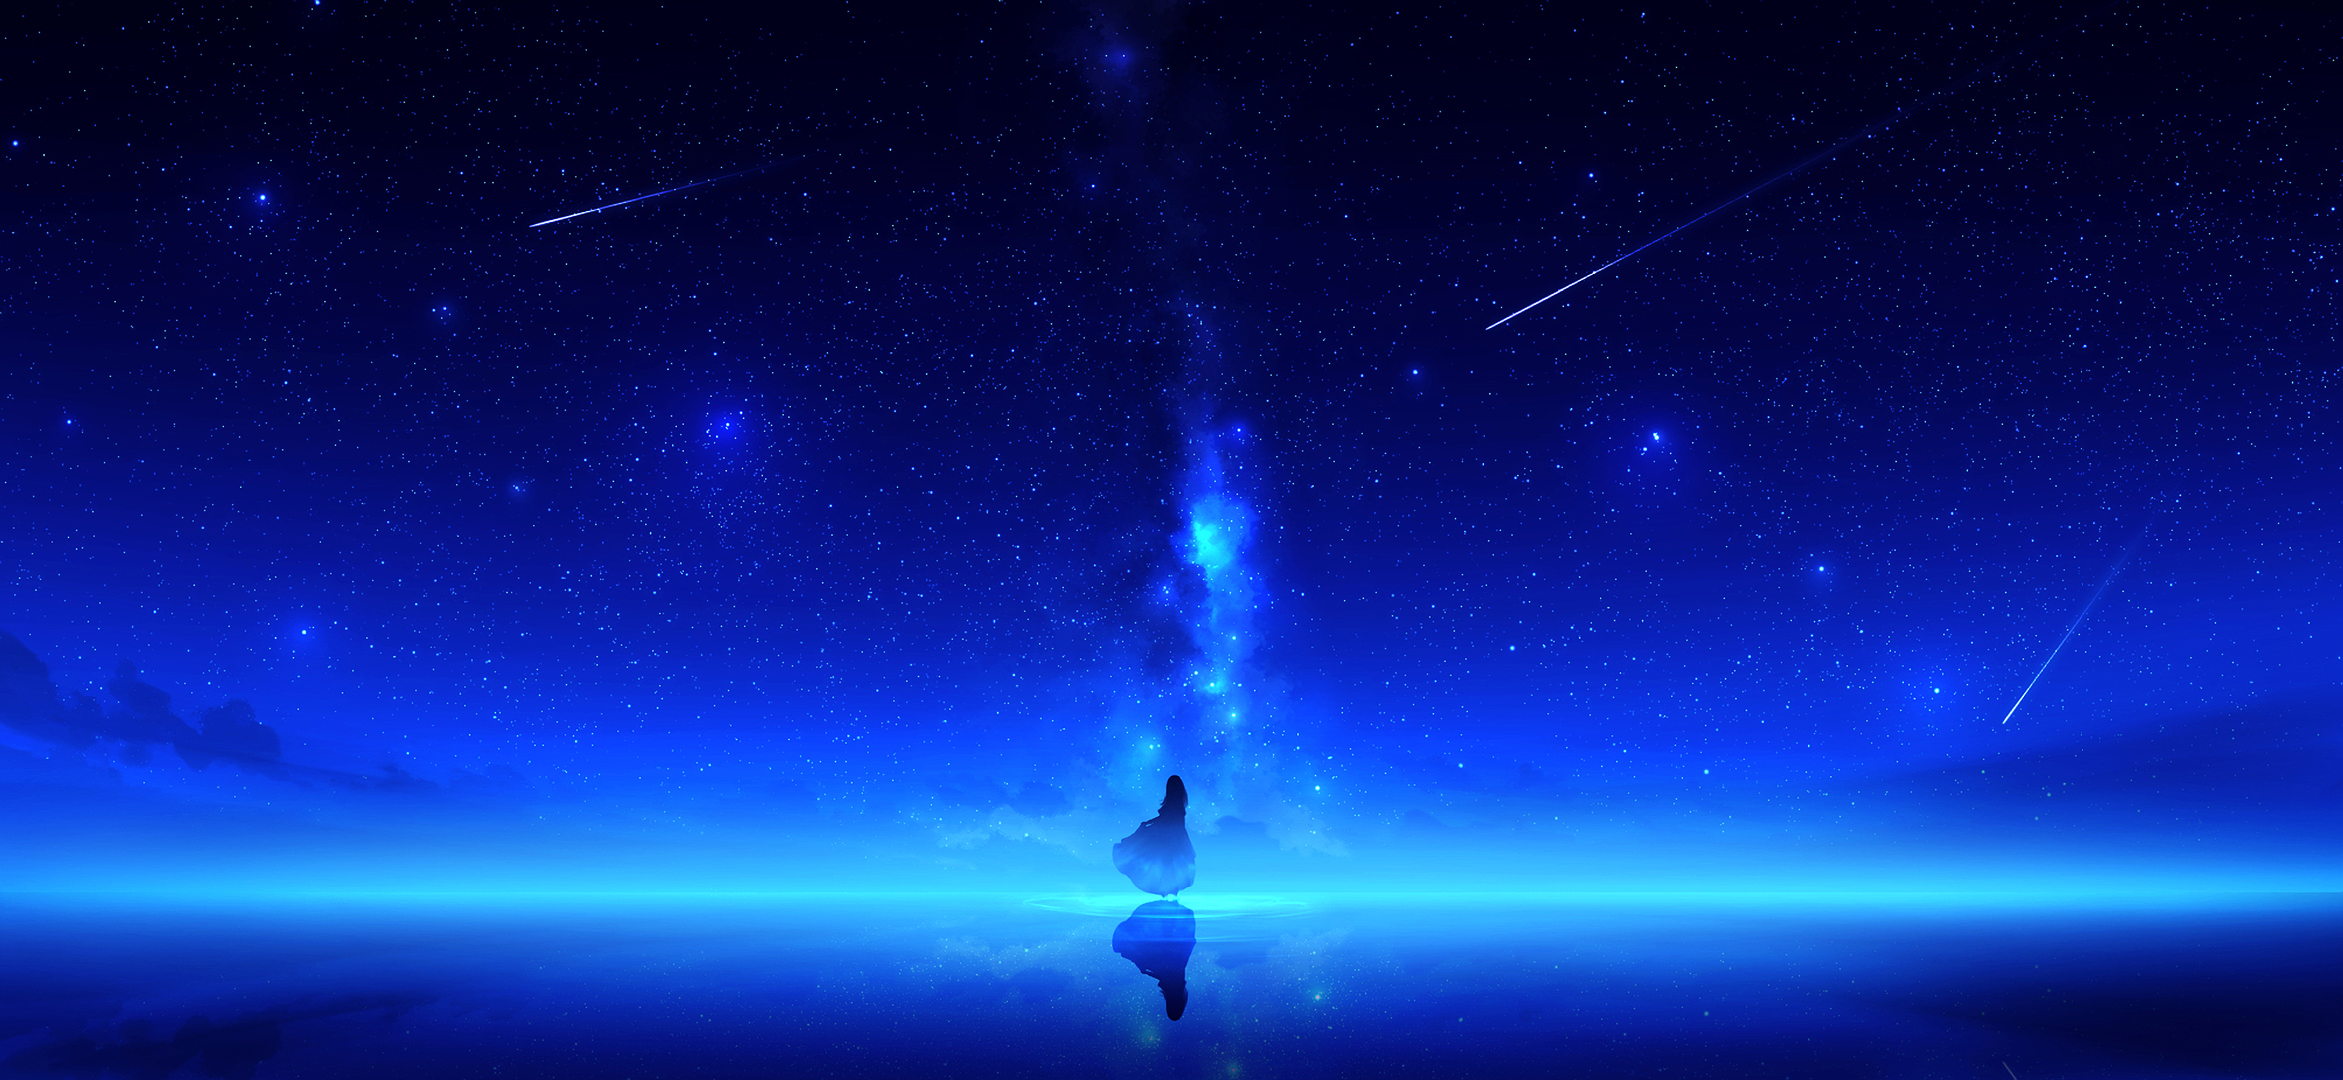 Download Lake Reflection Shooting Star Starry Sky Night Anime Original ...